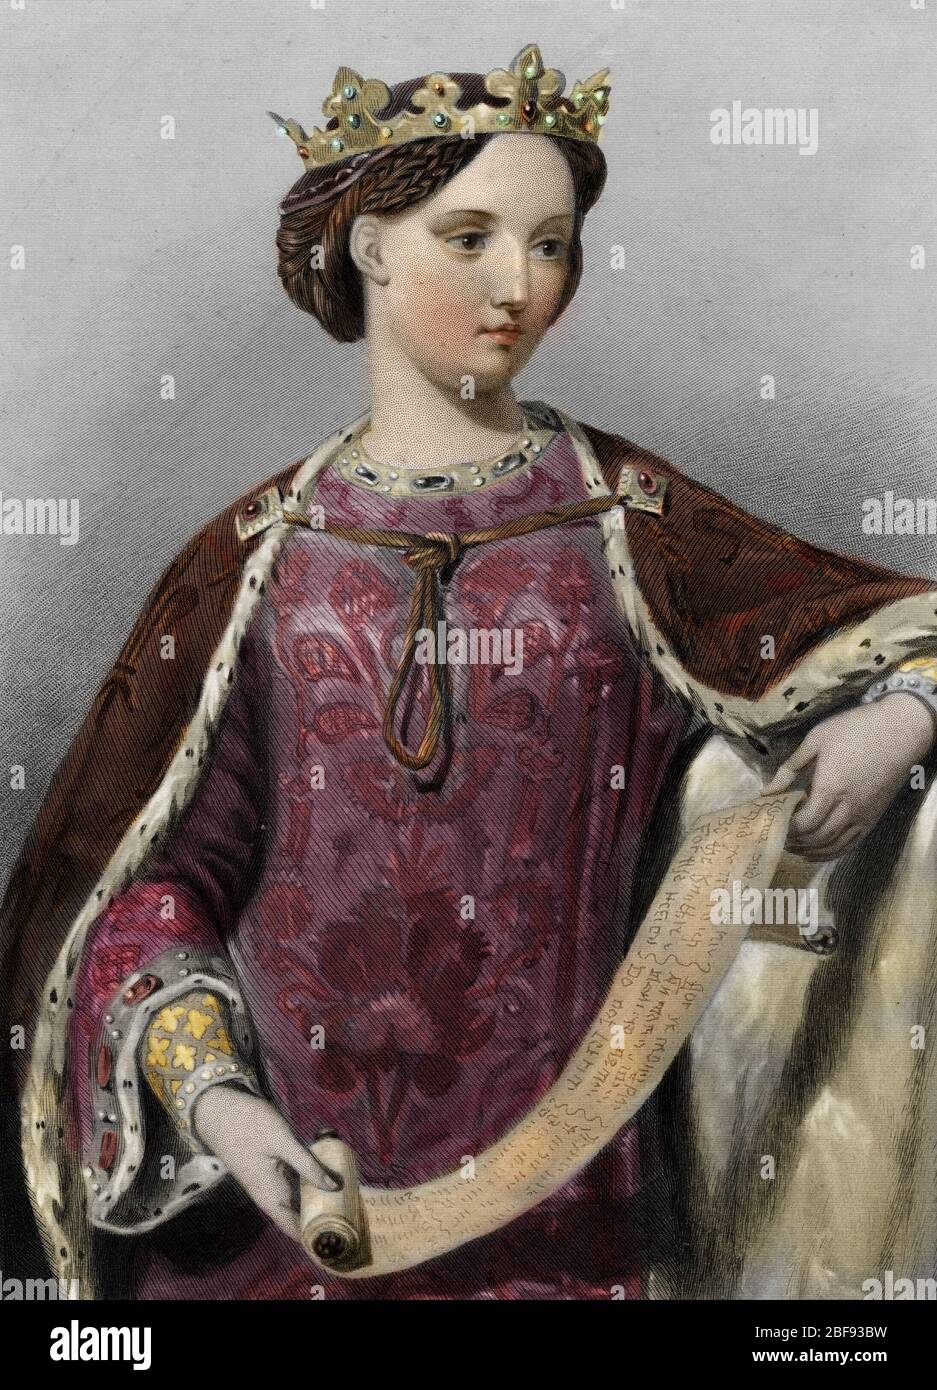 'La reine d'Angleterre Marguerite de France (1279-1318) epouse du roi Edouard Ier' Marguerite of France, queen of King Edward I of England, holding a Stock Photo